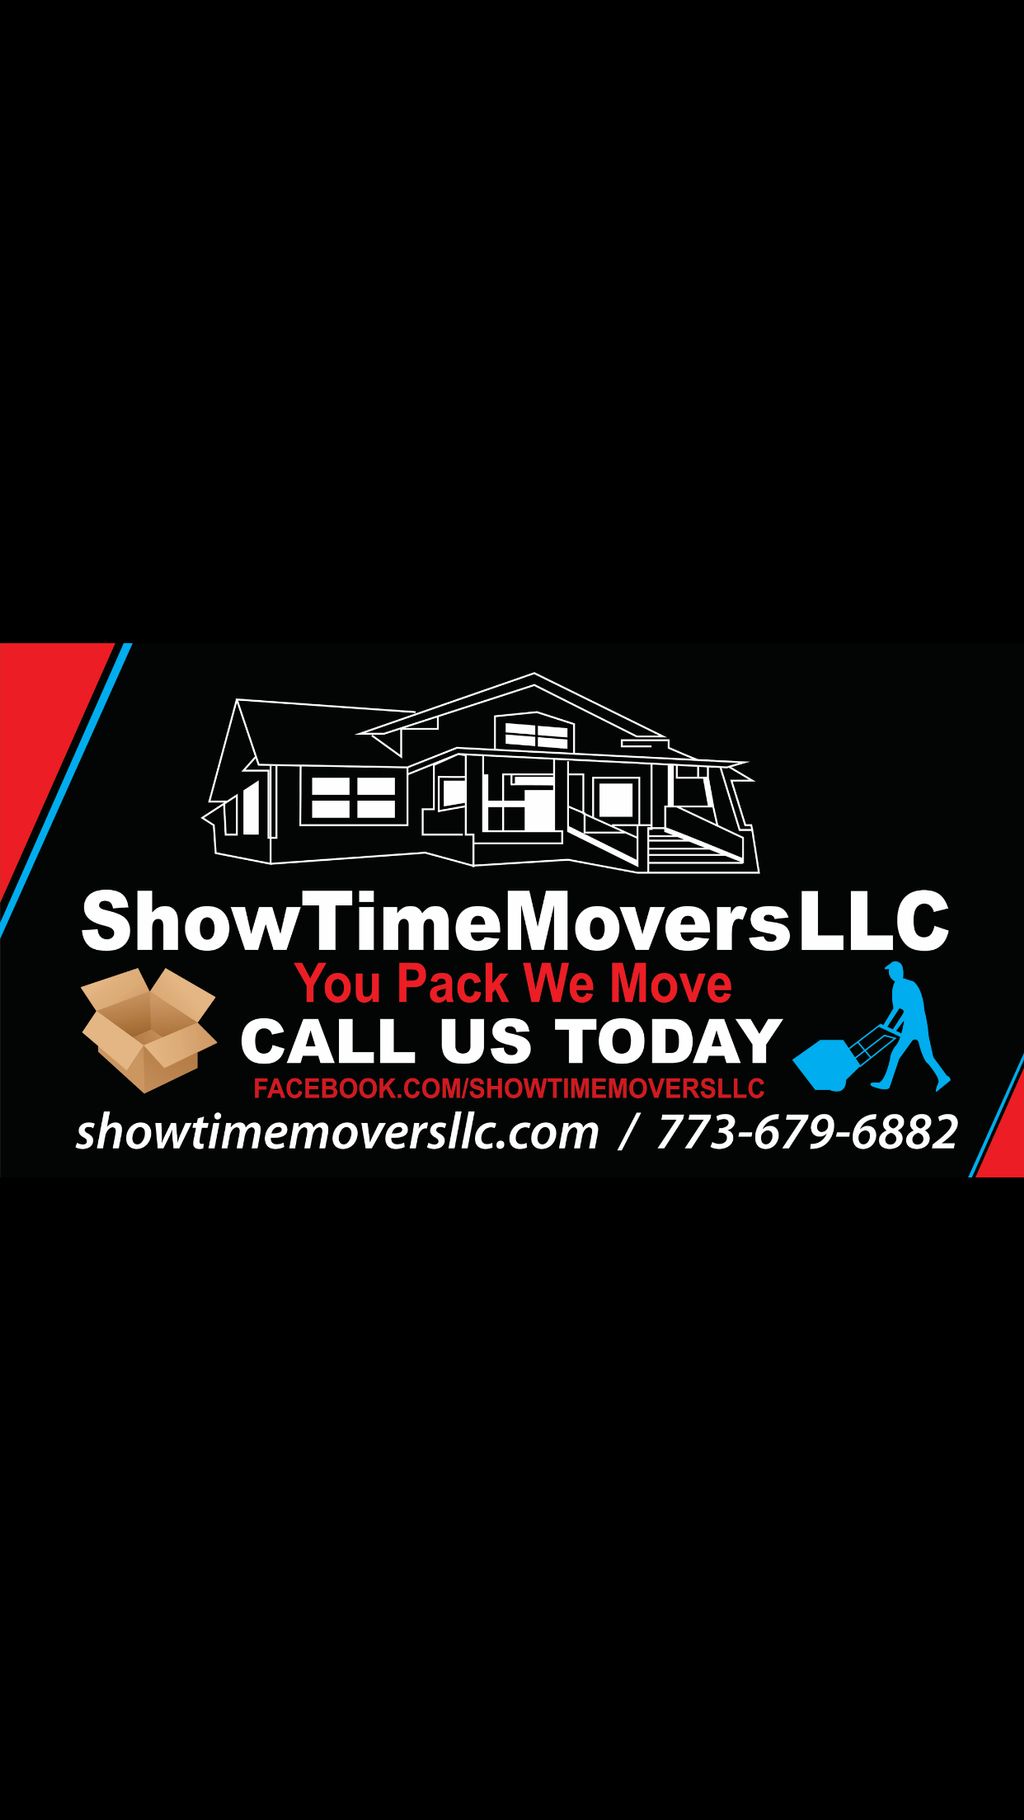 ShowTimeMovers LLC